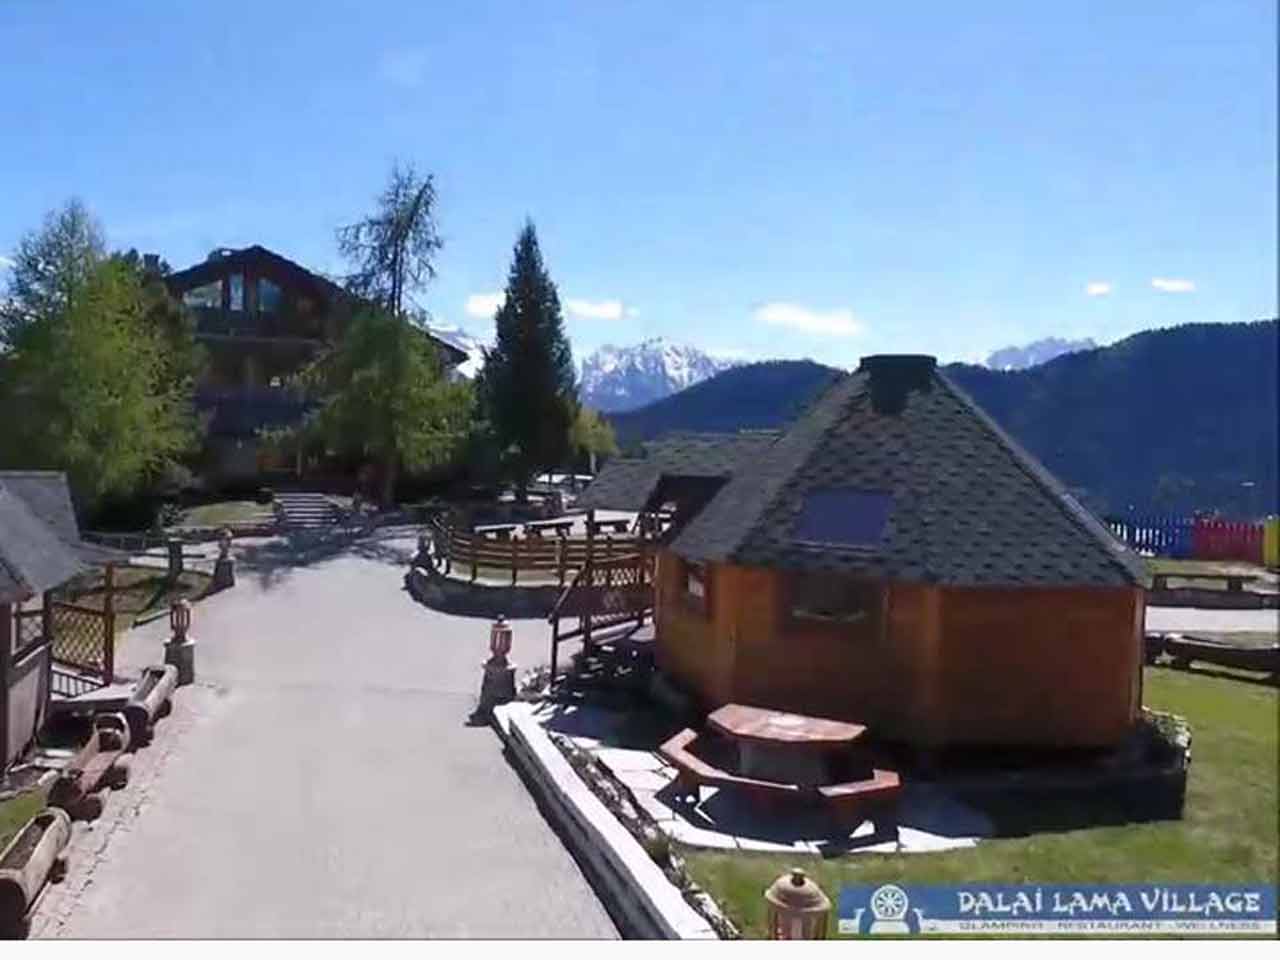 I campeggi in Valle d'Aosta: Dalailama Village.